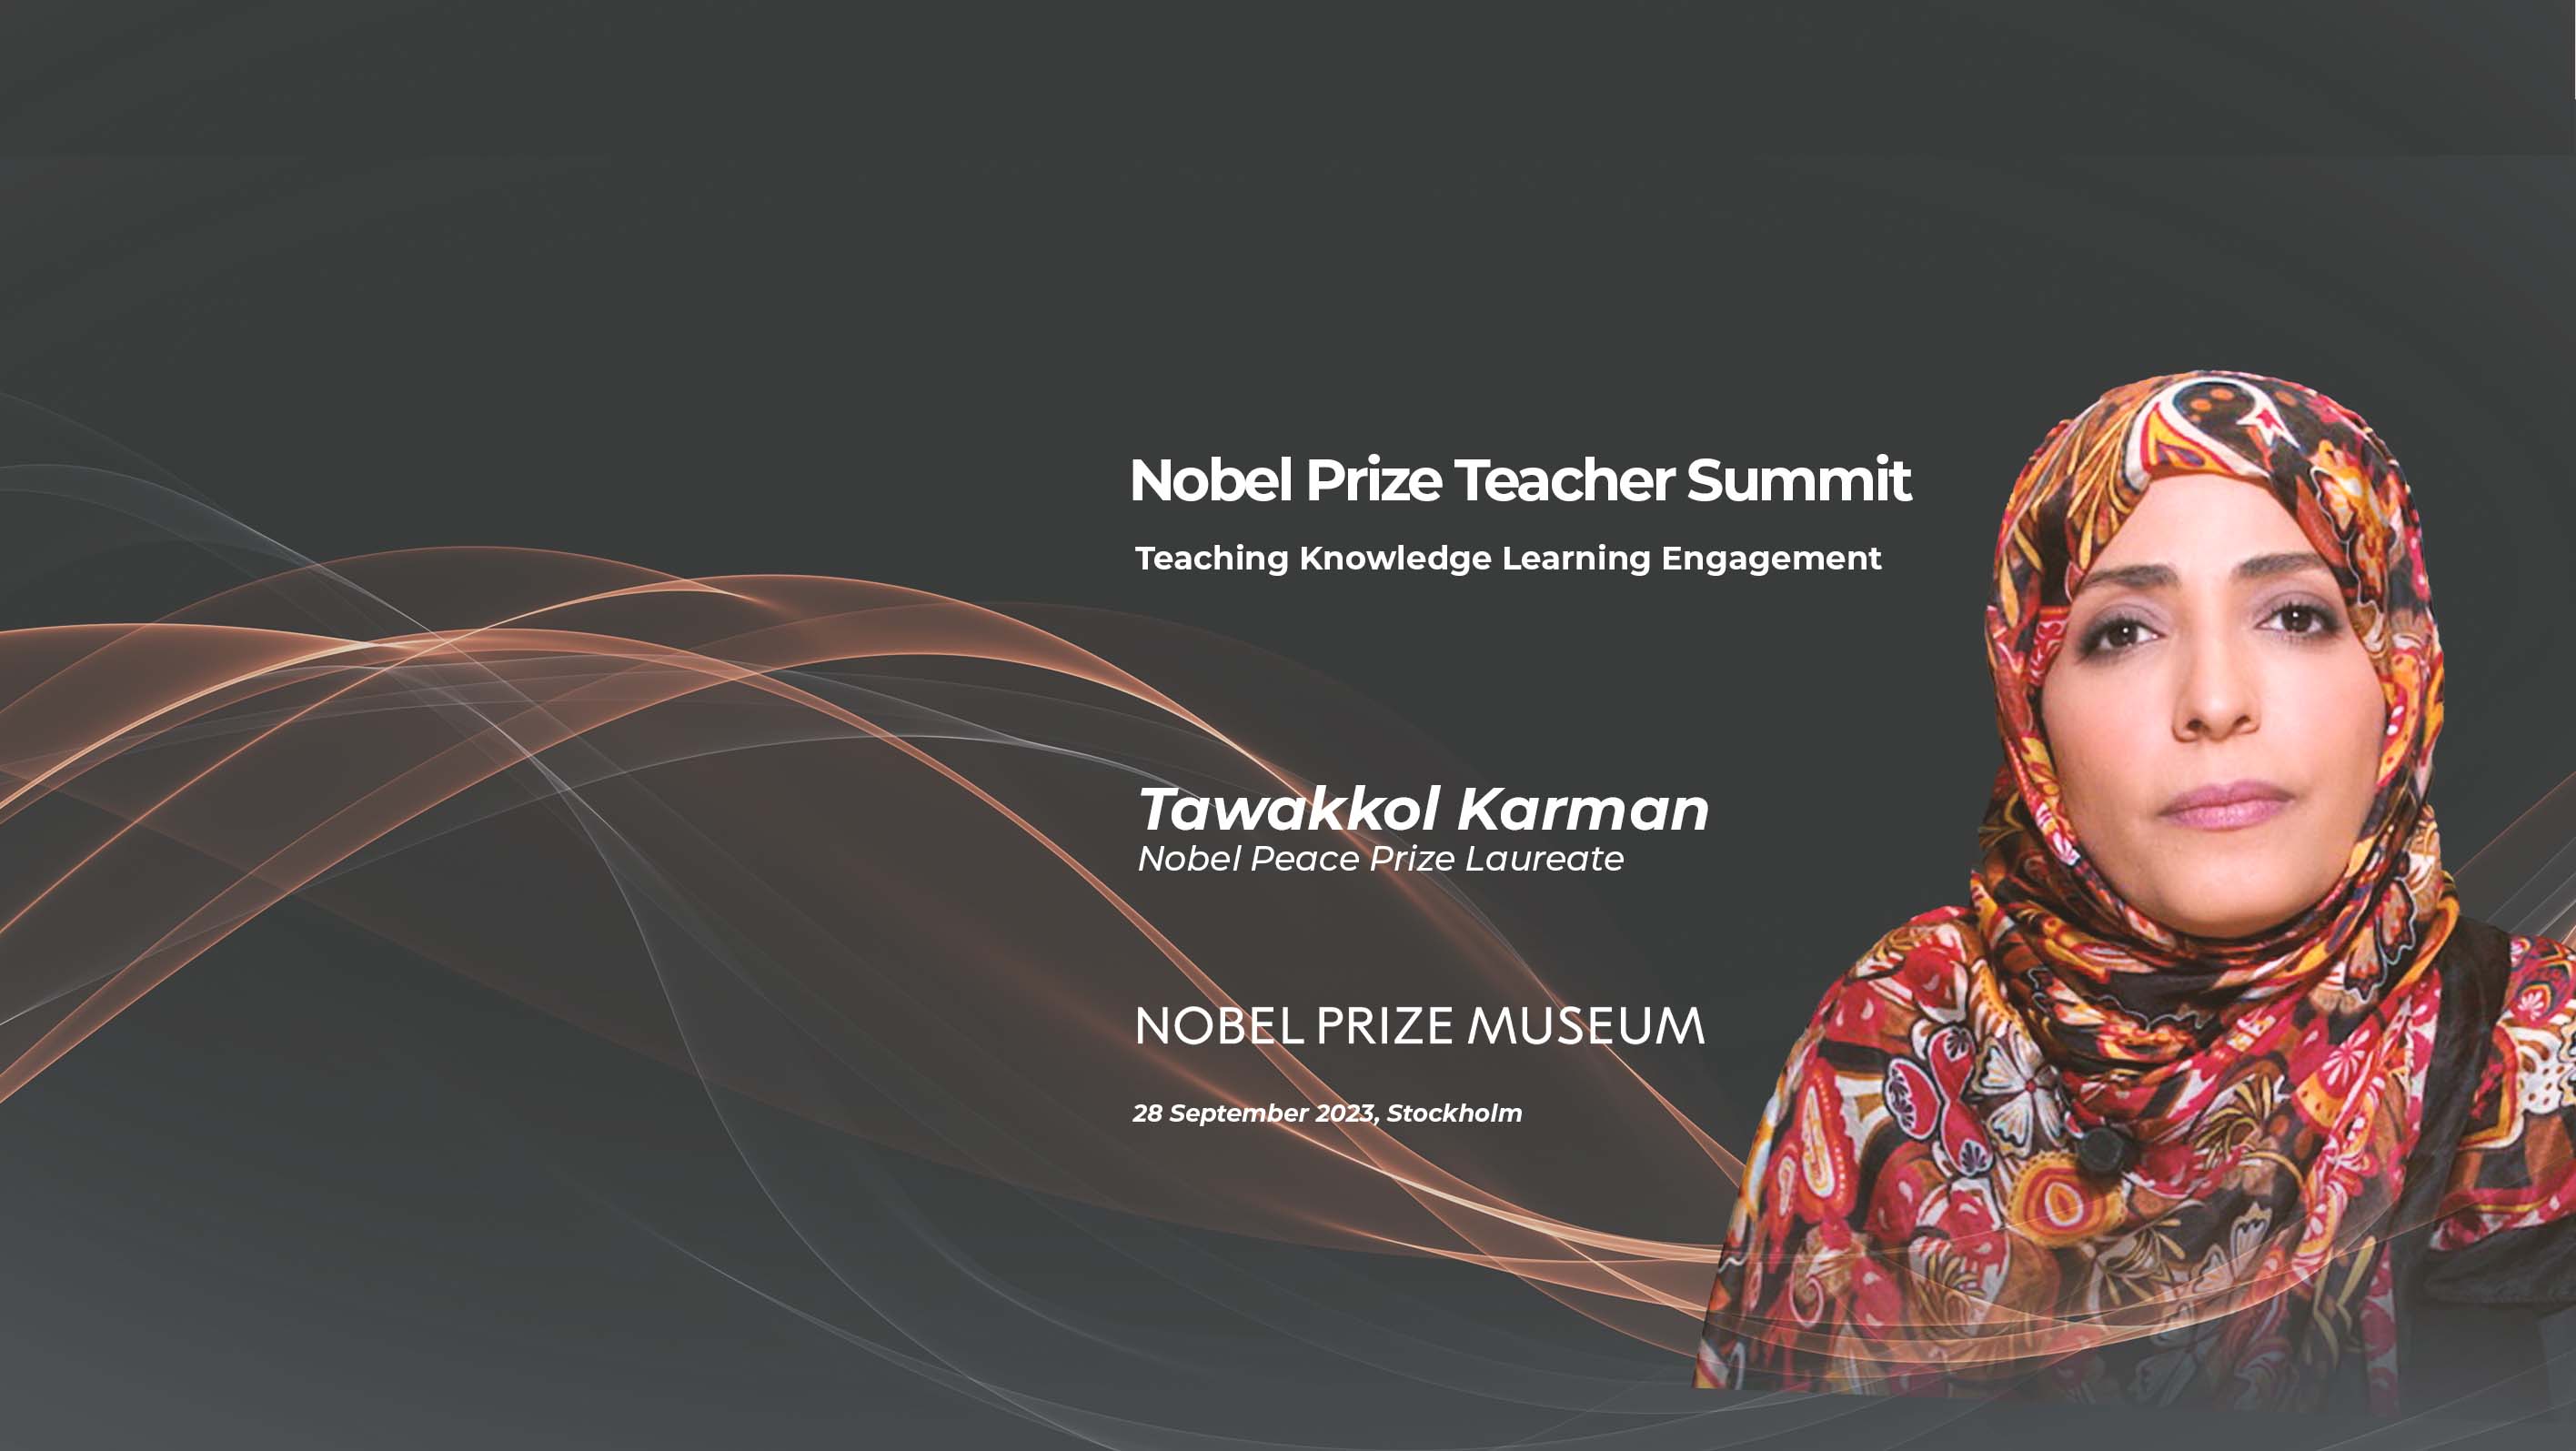 Nobel Teacher Summit welcomes Tawakkol Karman as key participant in Stockholm